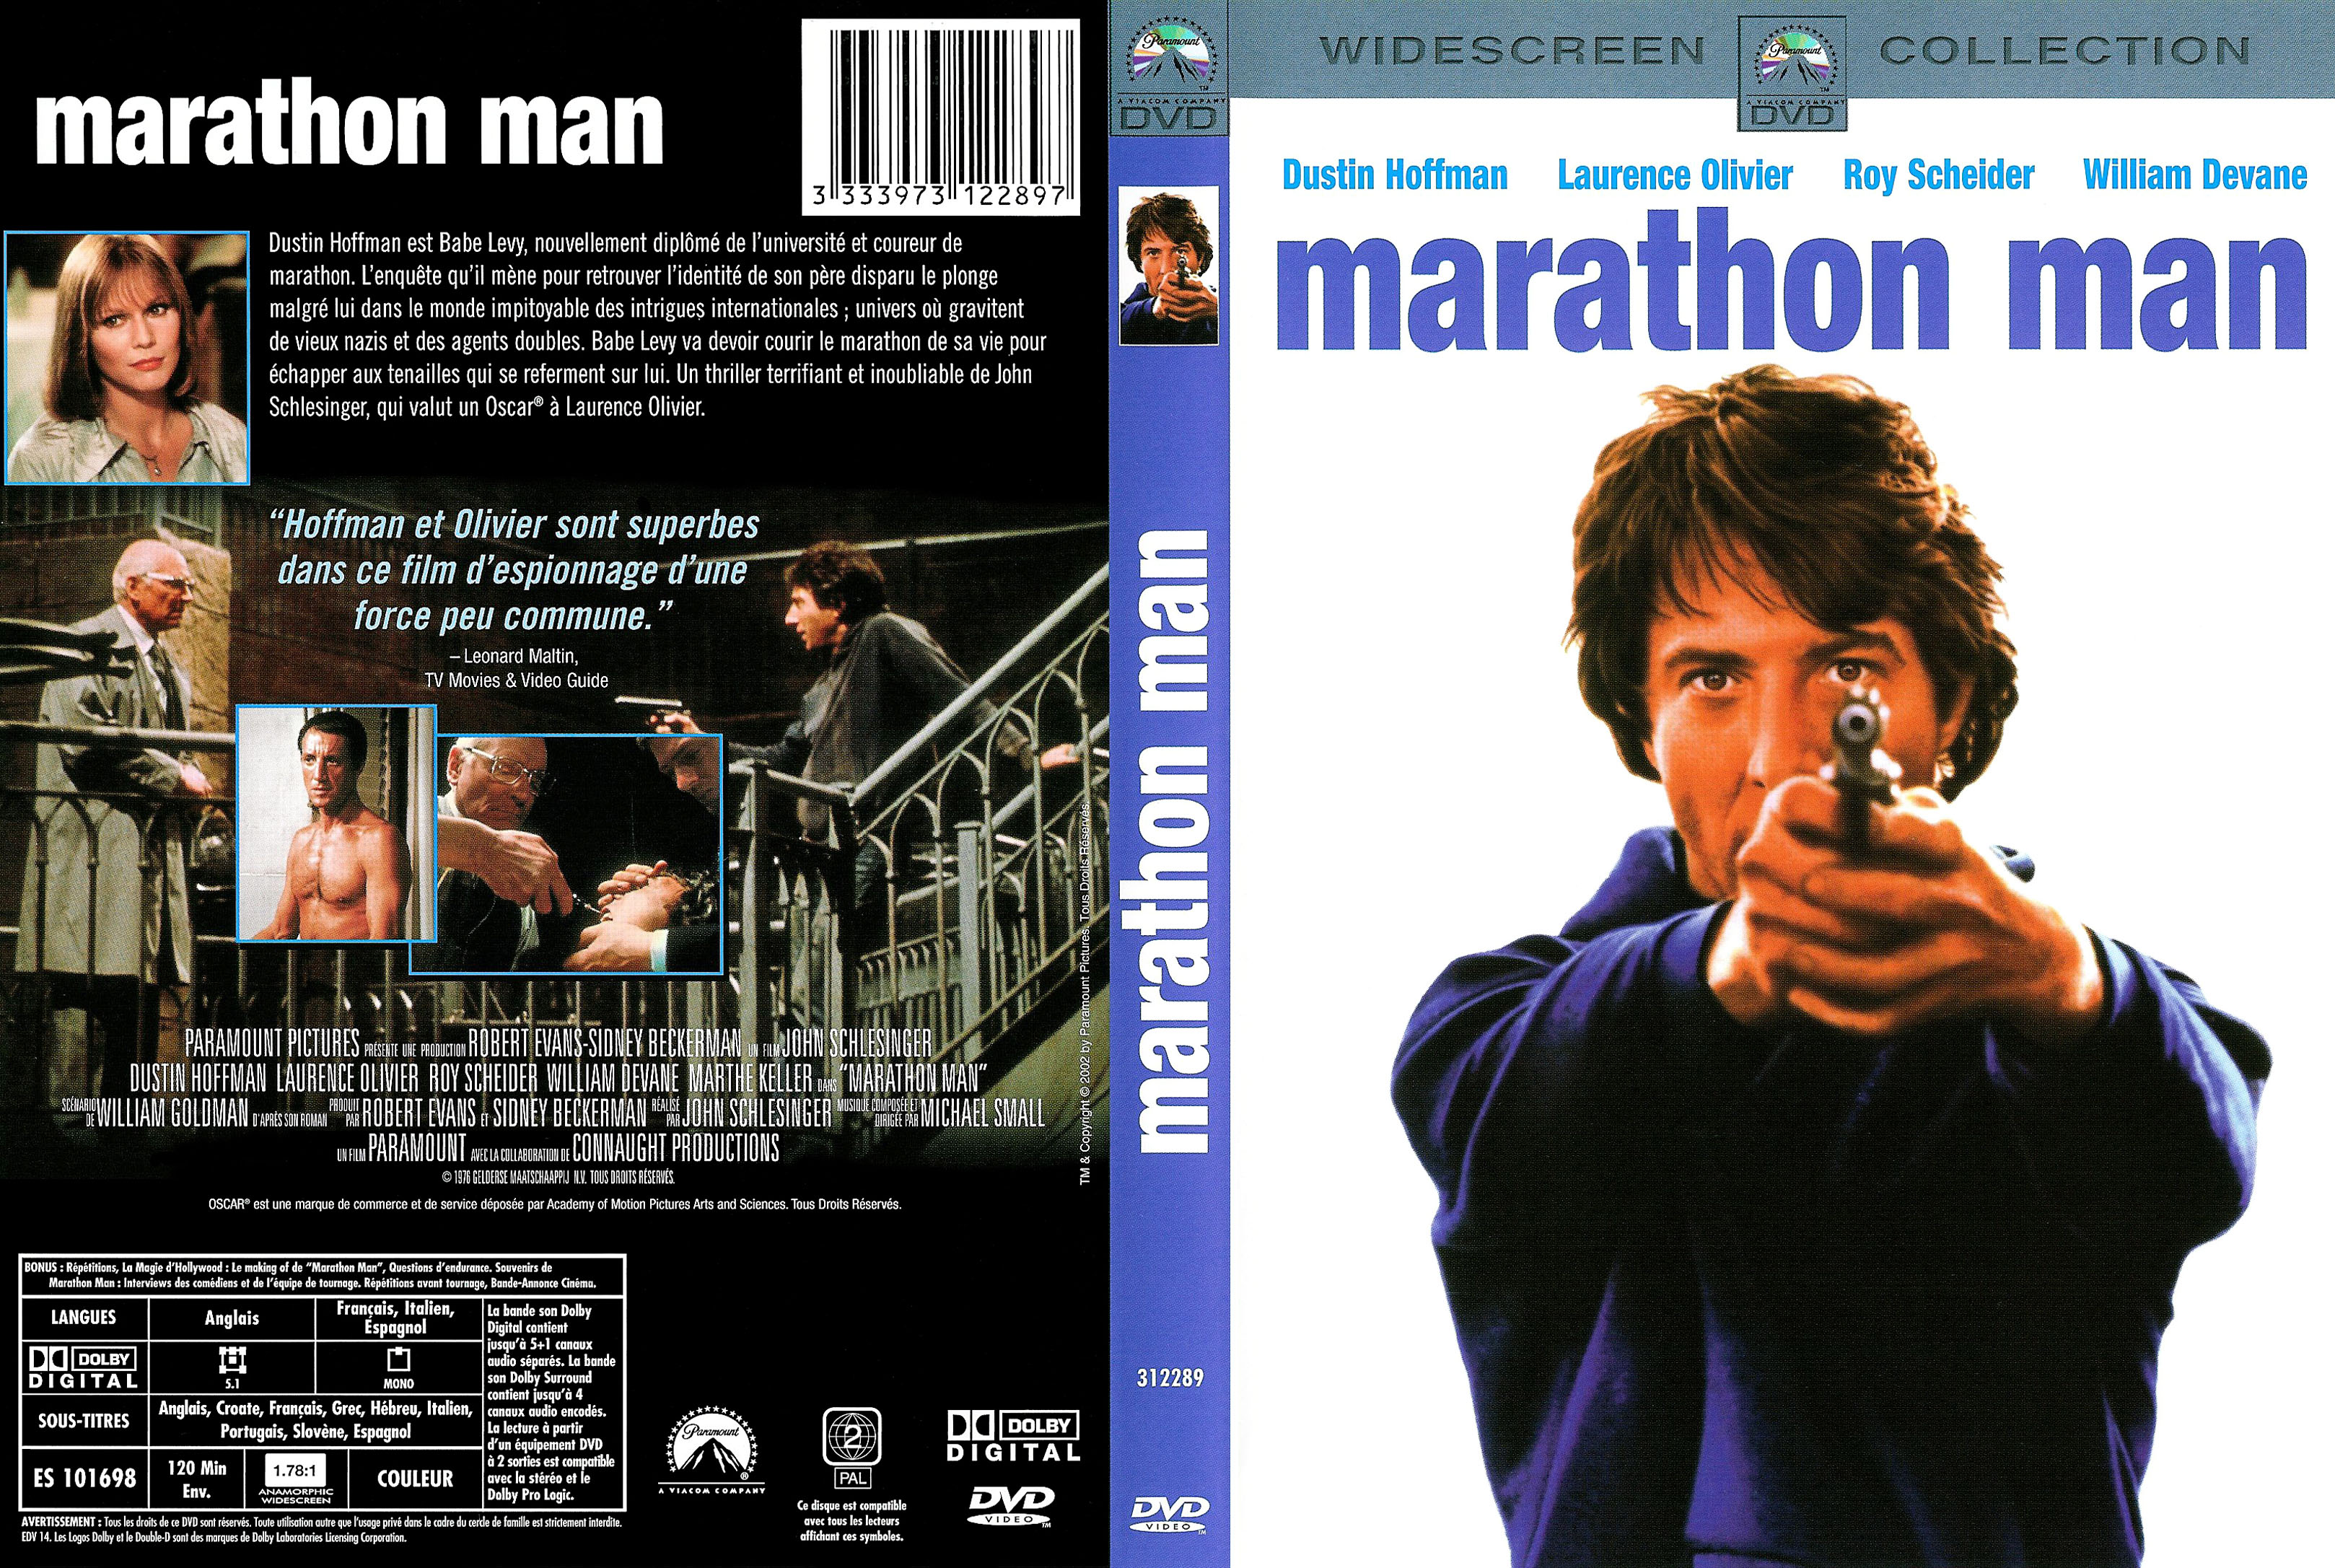 Jaquette DVD Marathon Man v2